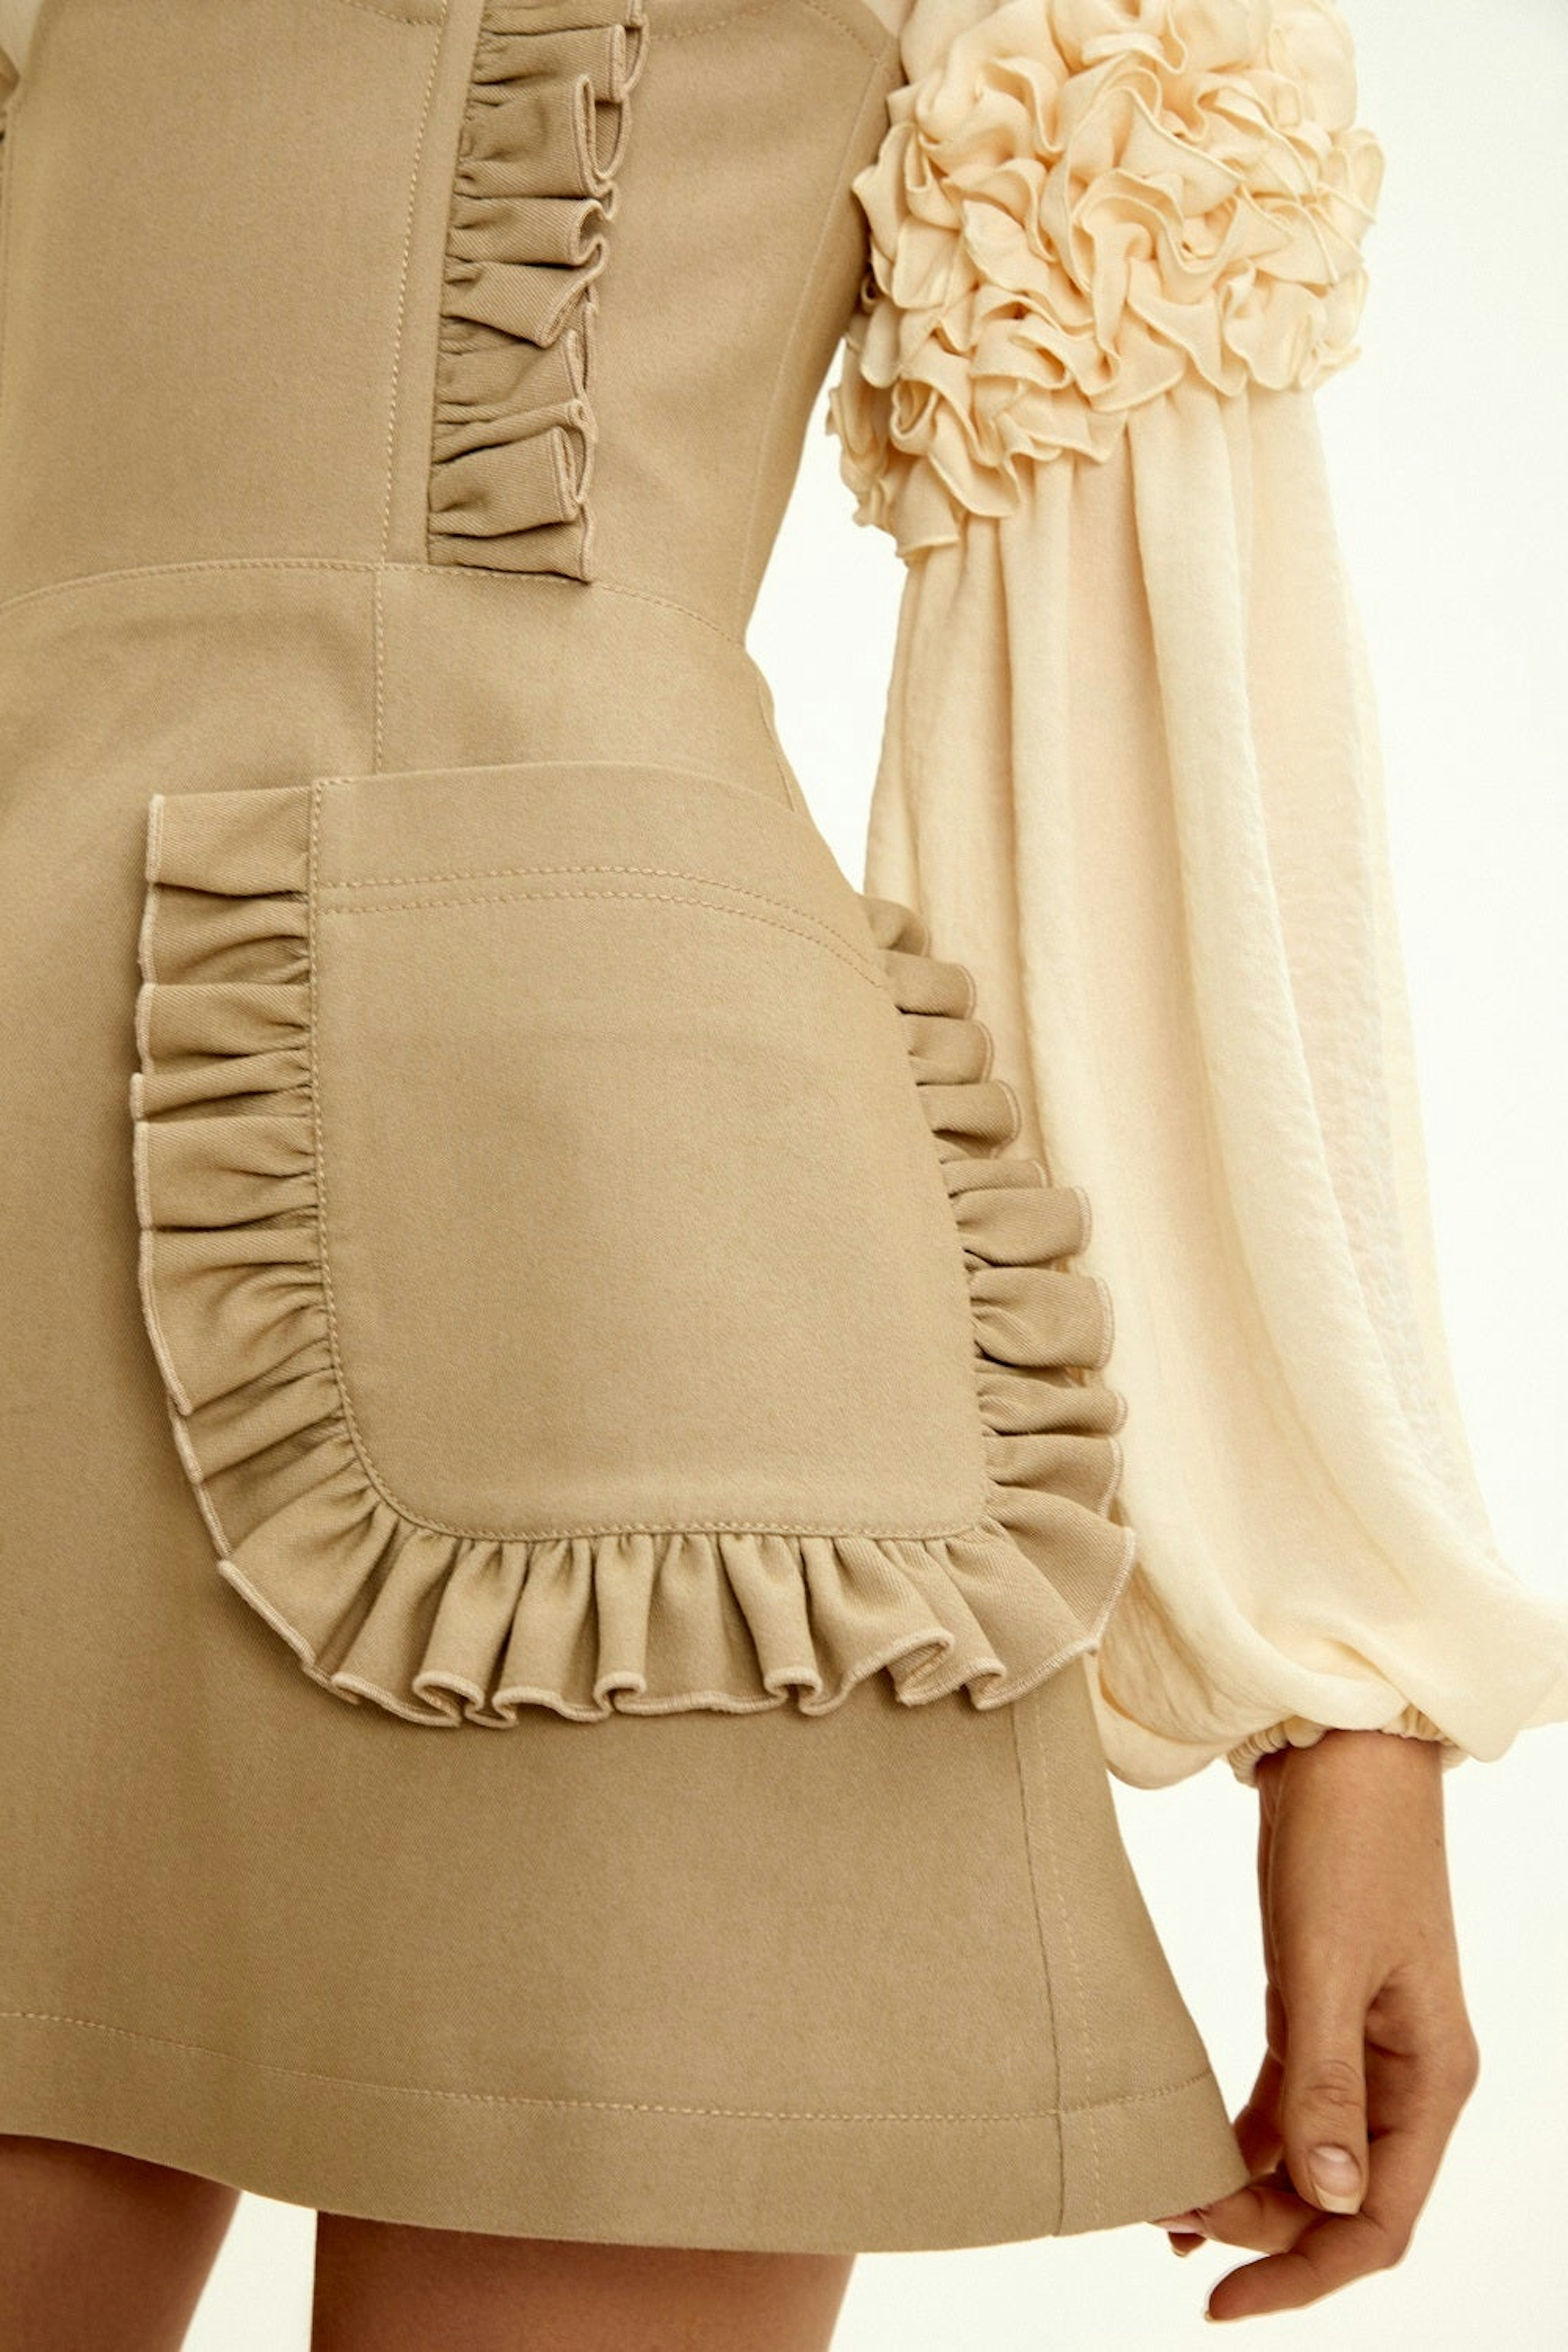 Shop Beige Corset Skirt from Guranda at Seezona